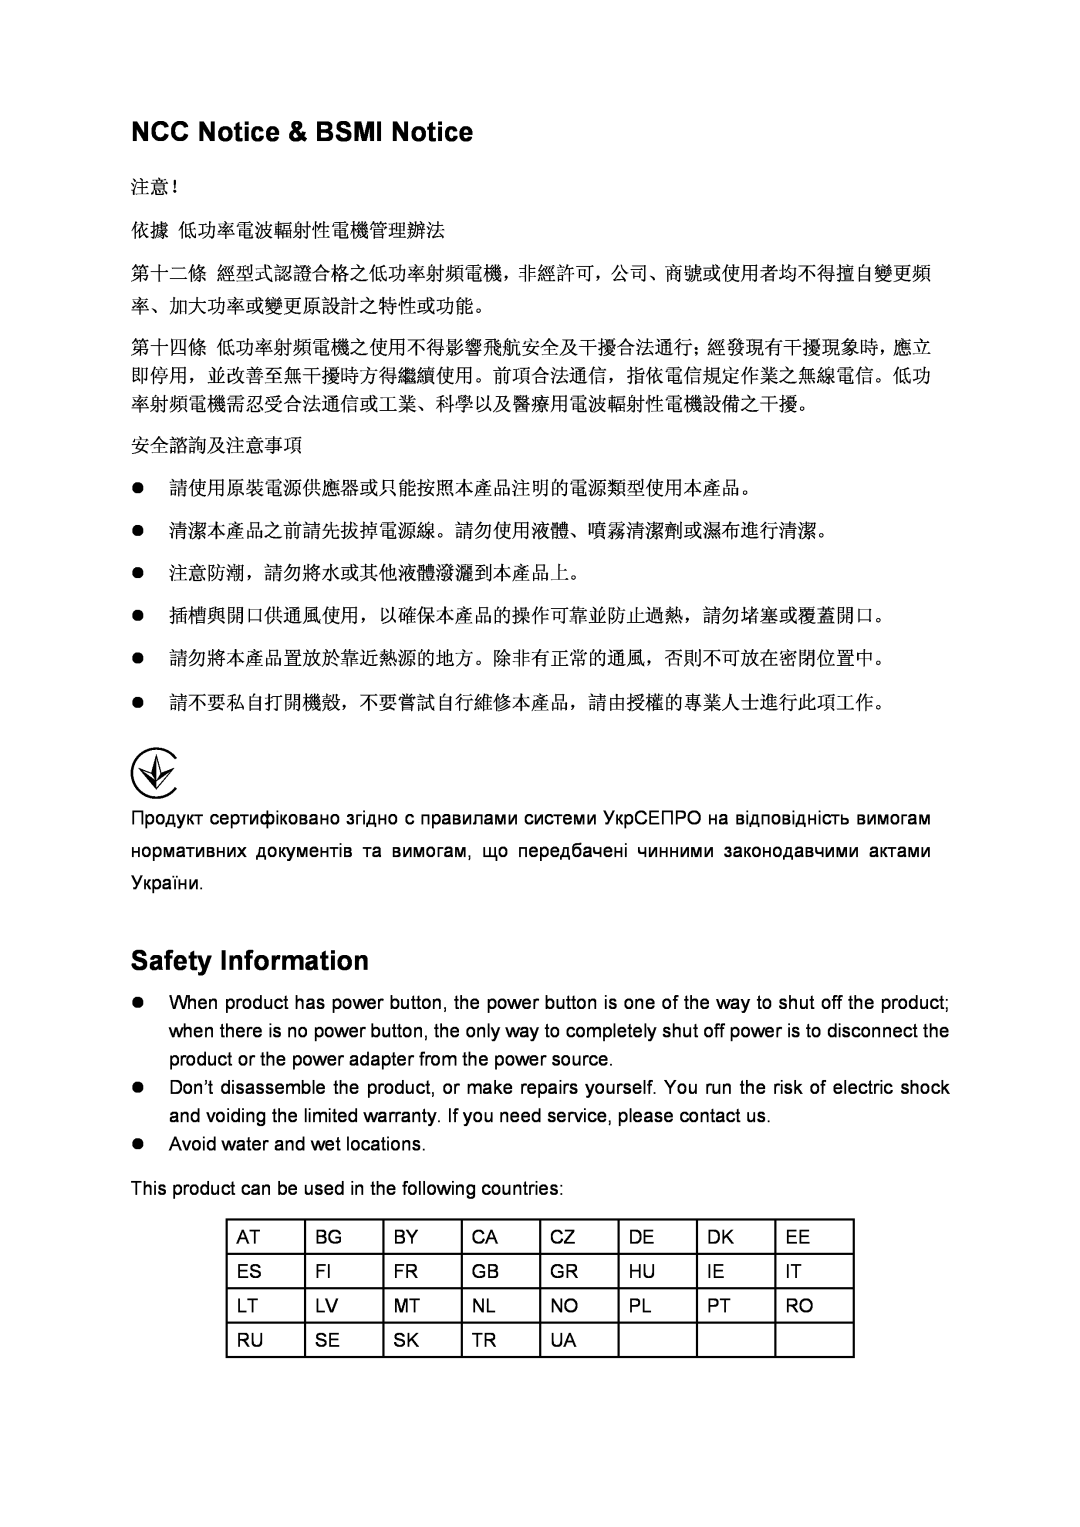 TP-Link TTL-WN751N manual NCC Notice & BSMI Notice, Safety Information 